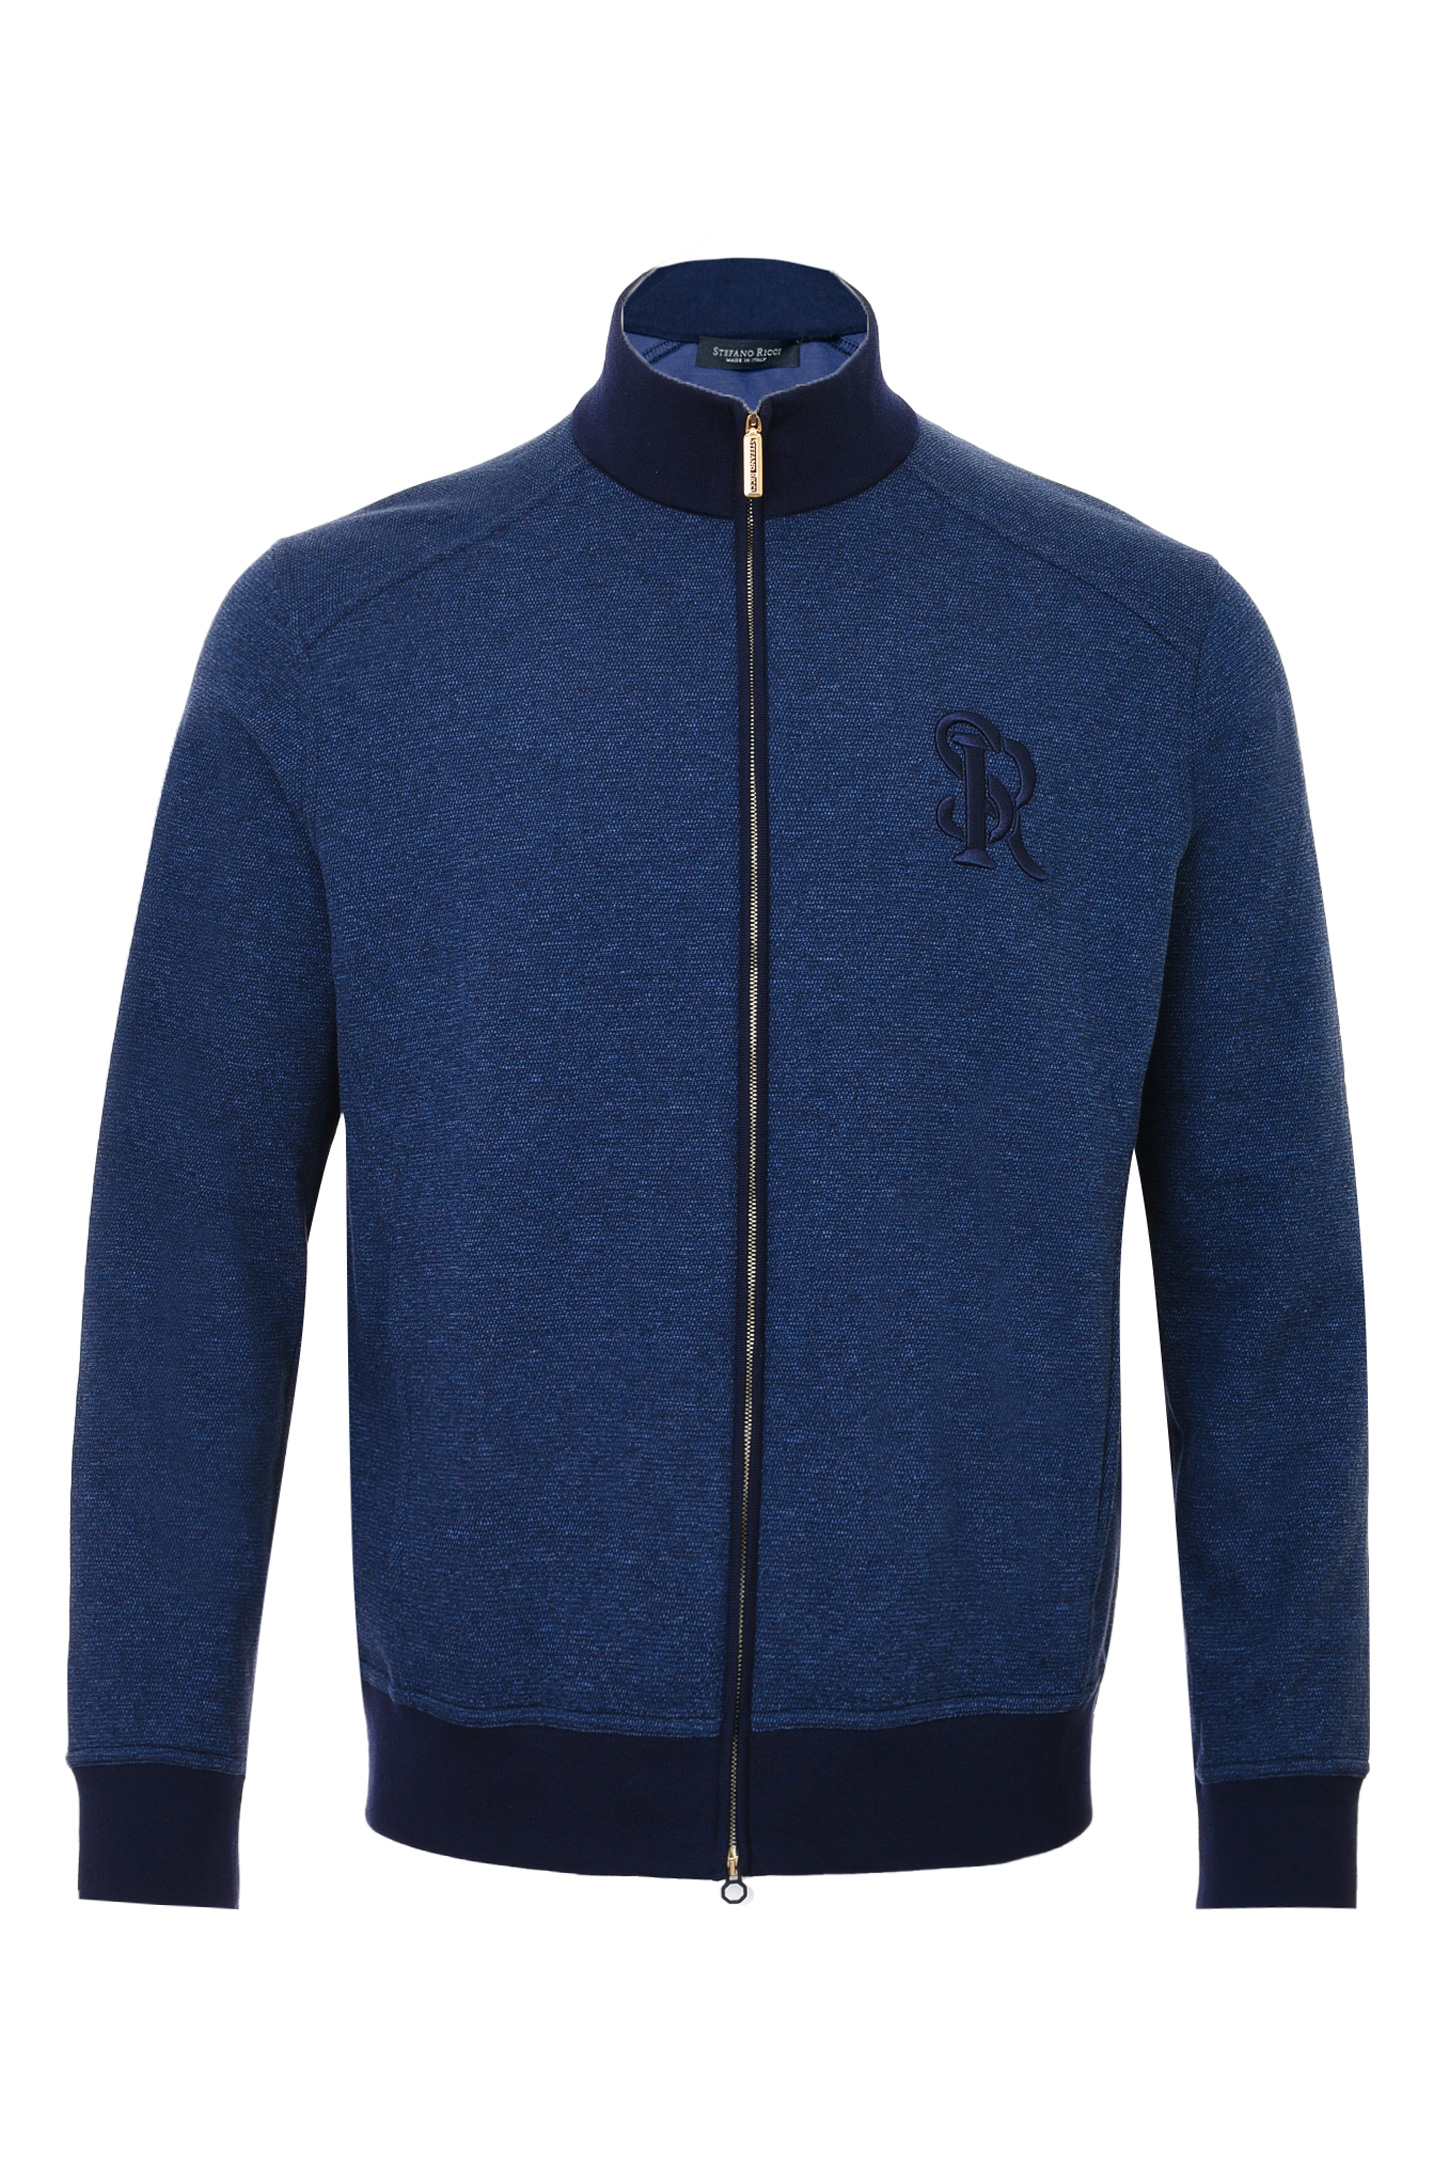 Куртка спорт (Кардиган) STEFANO RICCI K919029R31 T21410, цвет: Синий, Мужской